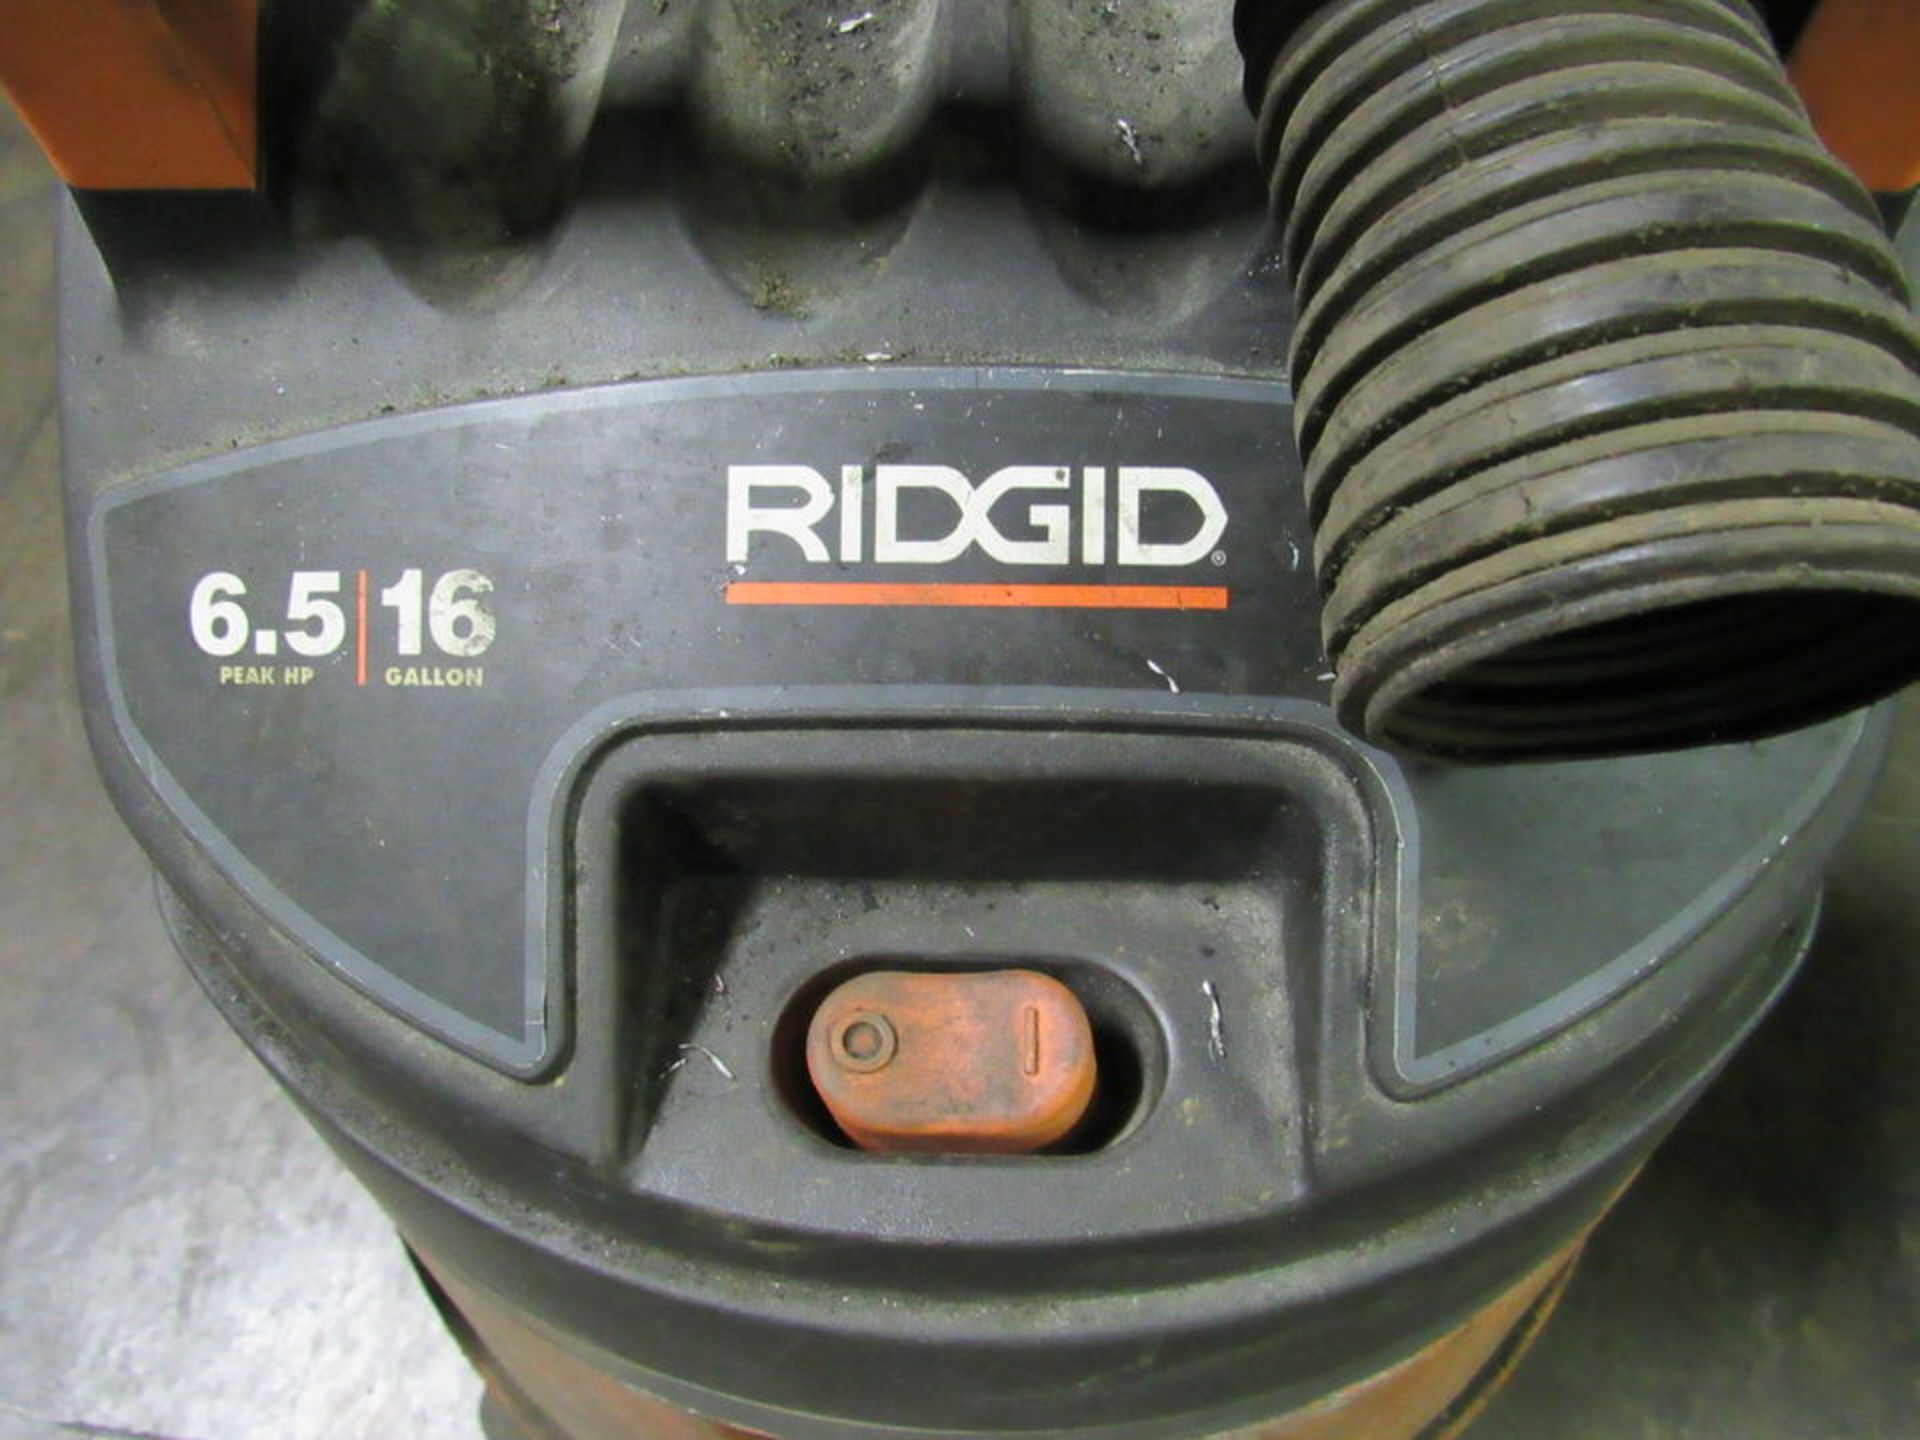 16 Gal. Ridgid Wet / Dry Shop Vac, 6.5 hp, 16 gal. cap., pleated paper cartridge filter, 2-1/2" dia. - Image 3 of 3